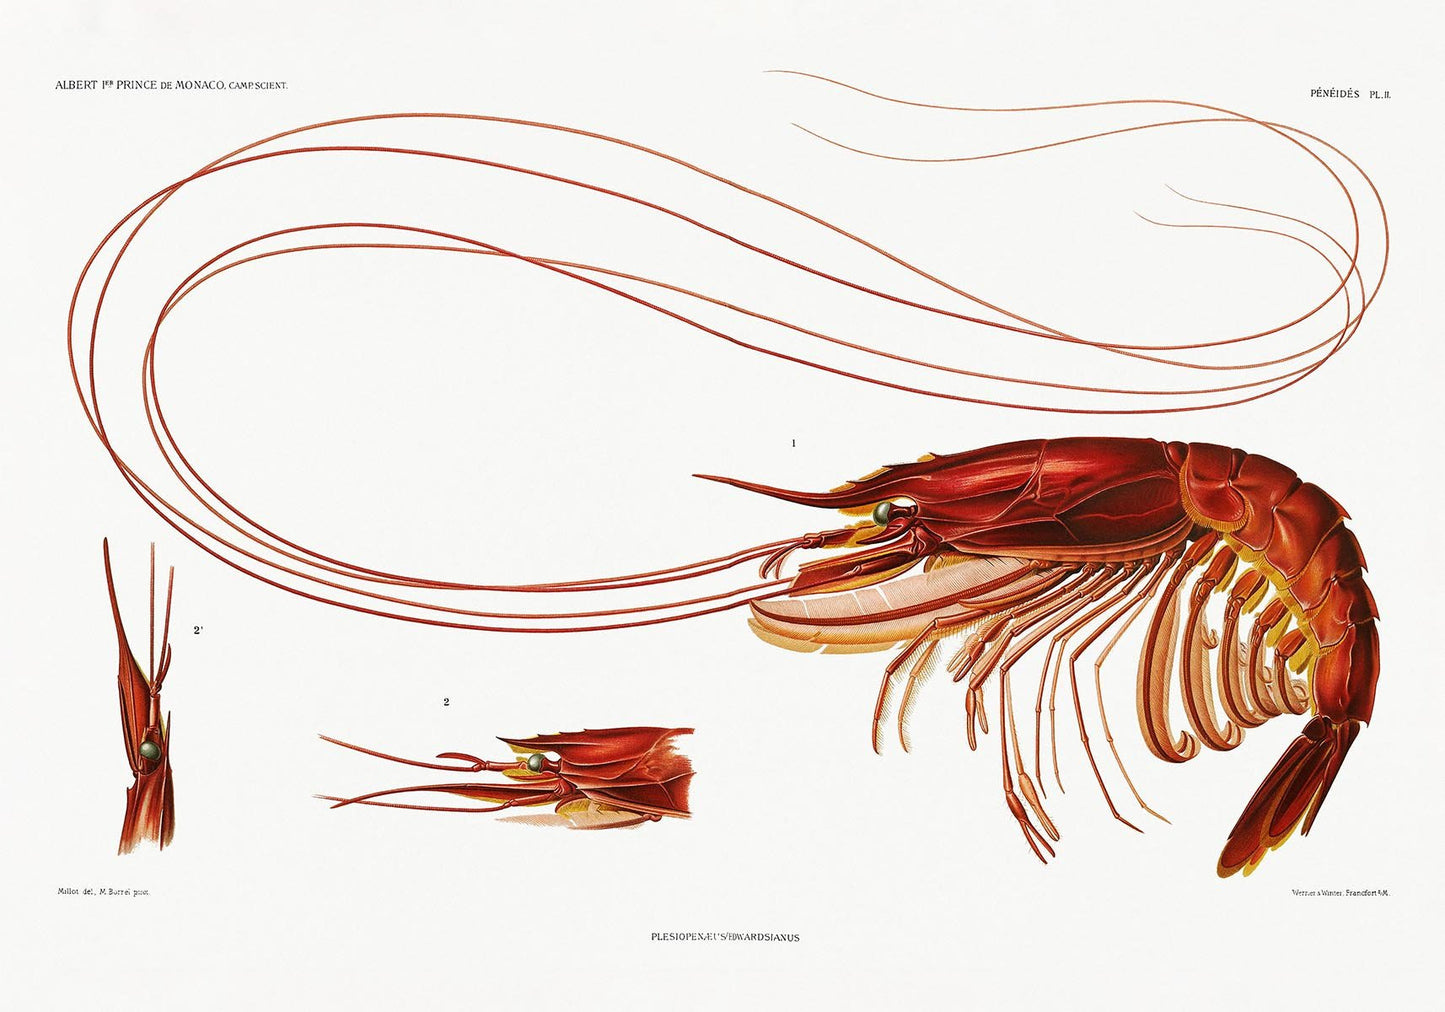 Shrimp Marine Life Poster